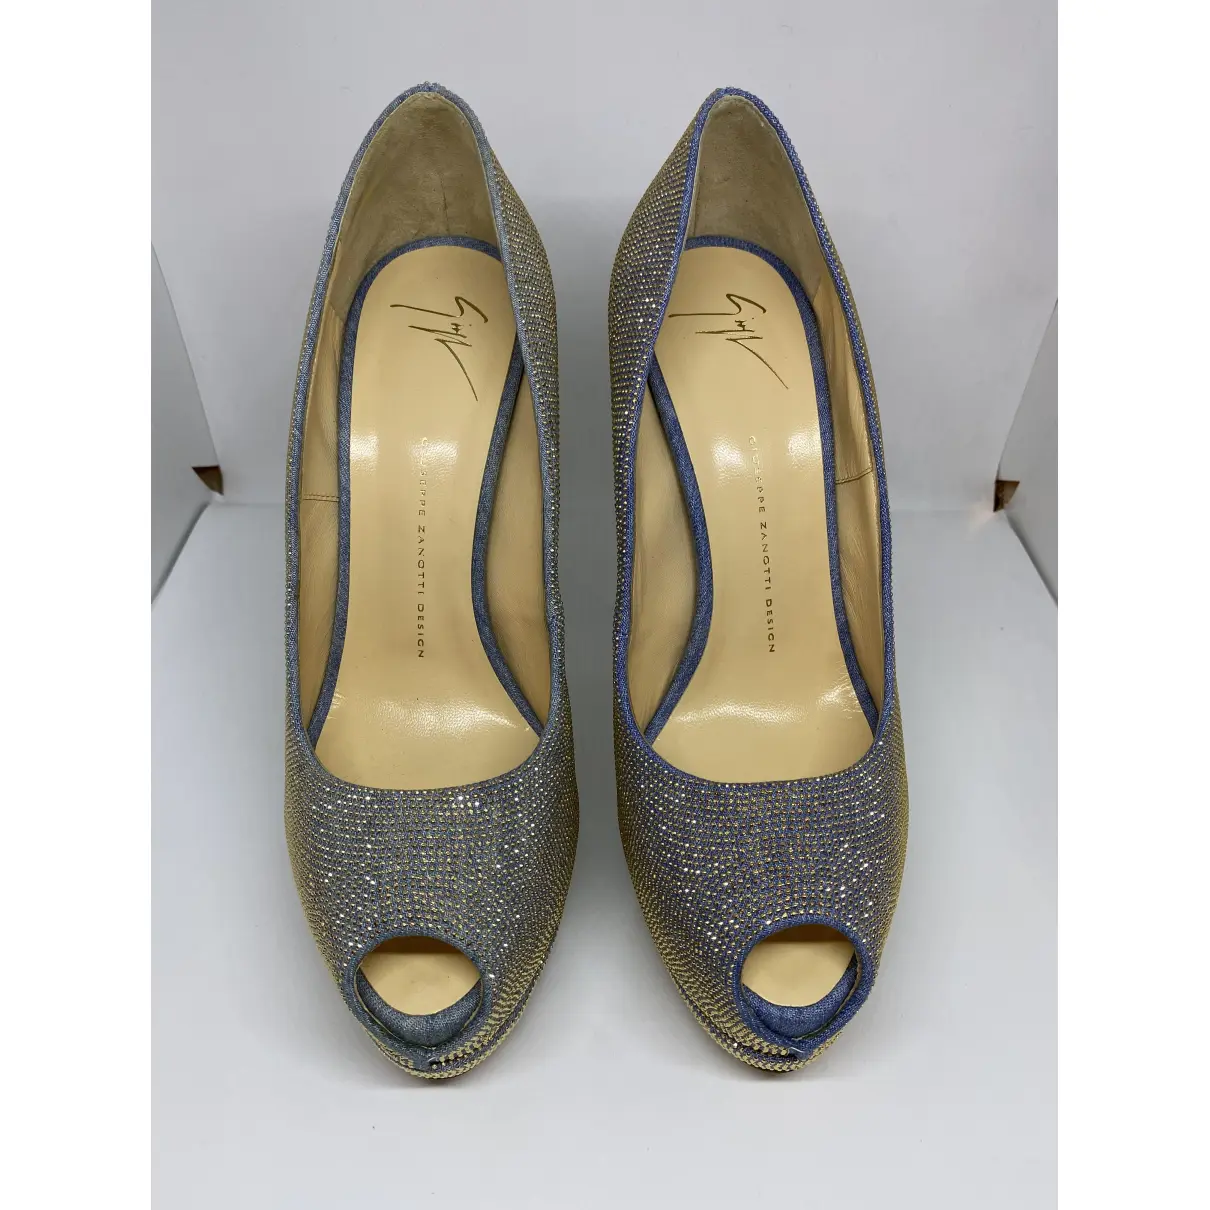 Buy Giuseppe Zanotti Glitter heels online